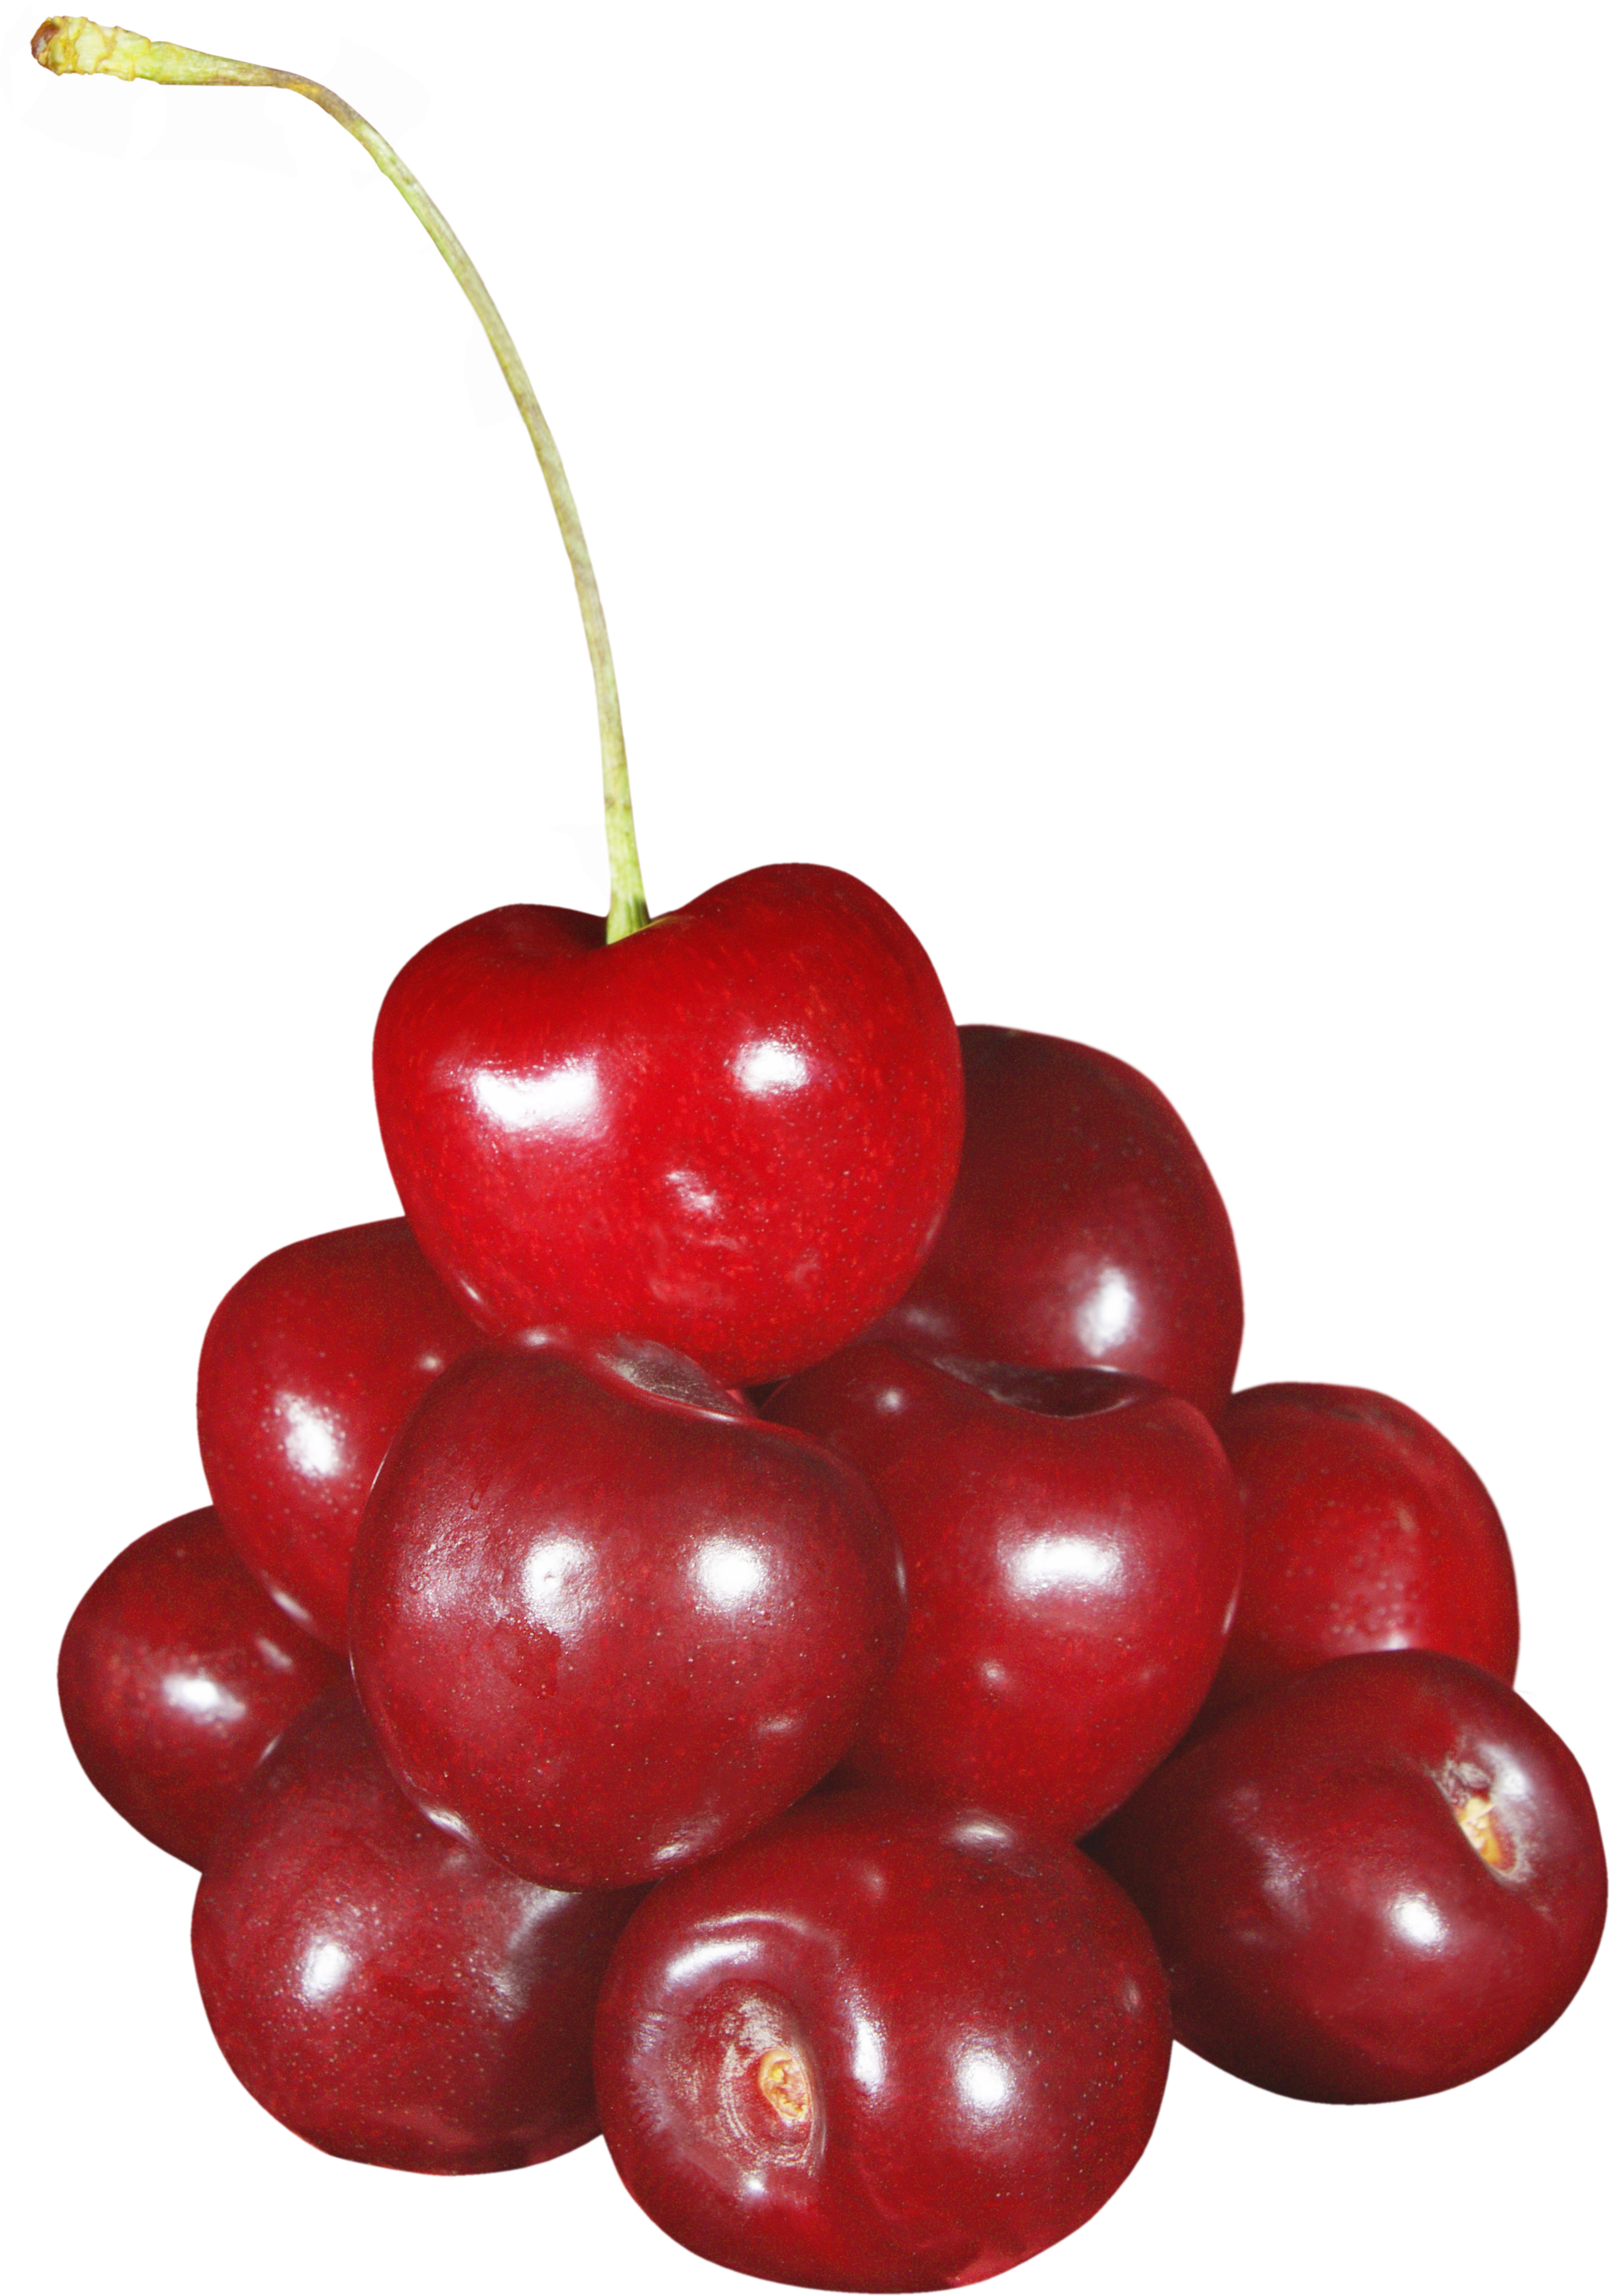 Cherrys